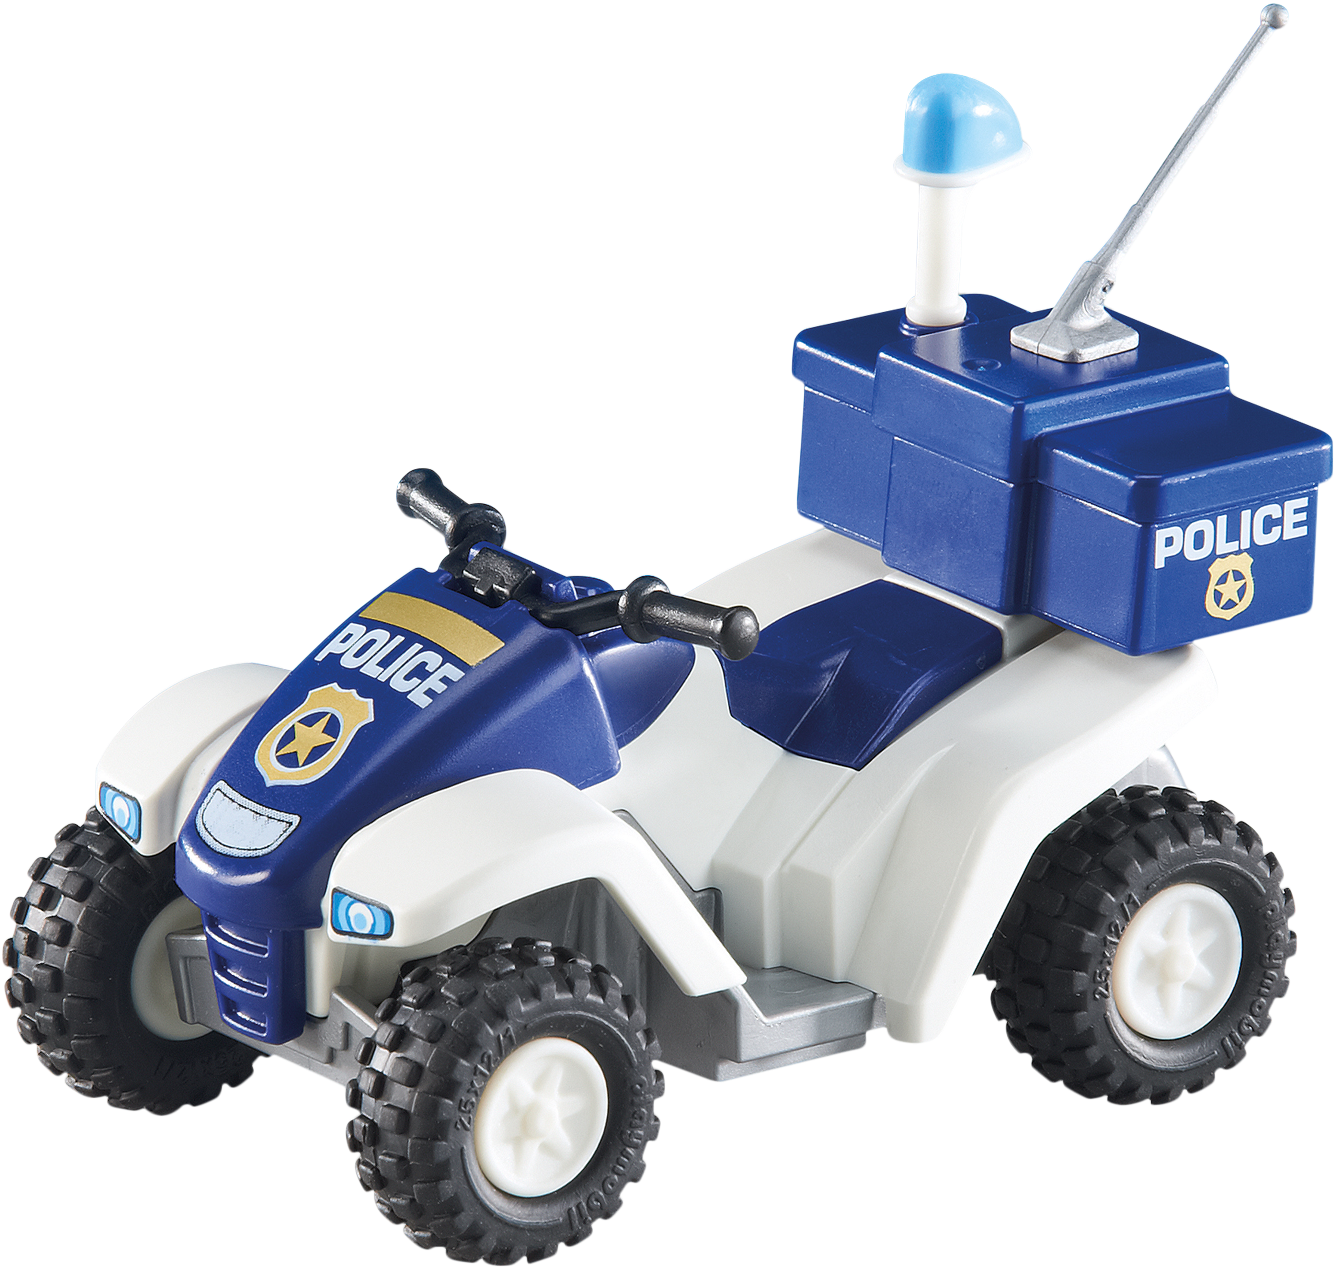 Police Quad Bike - Playmobil Police Quad Bike (2000x1400)